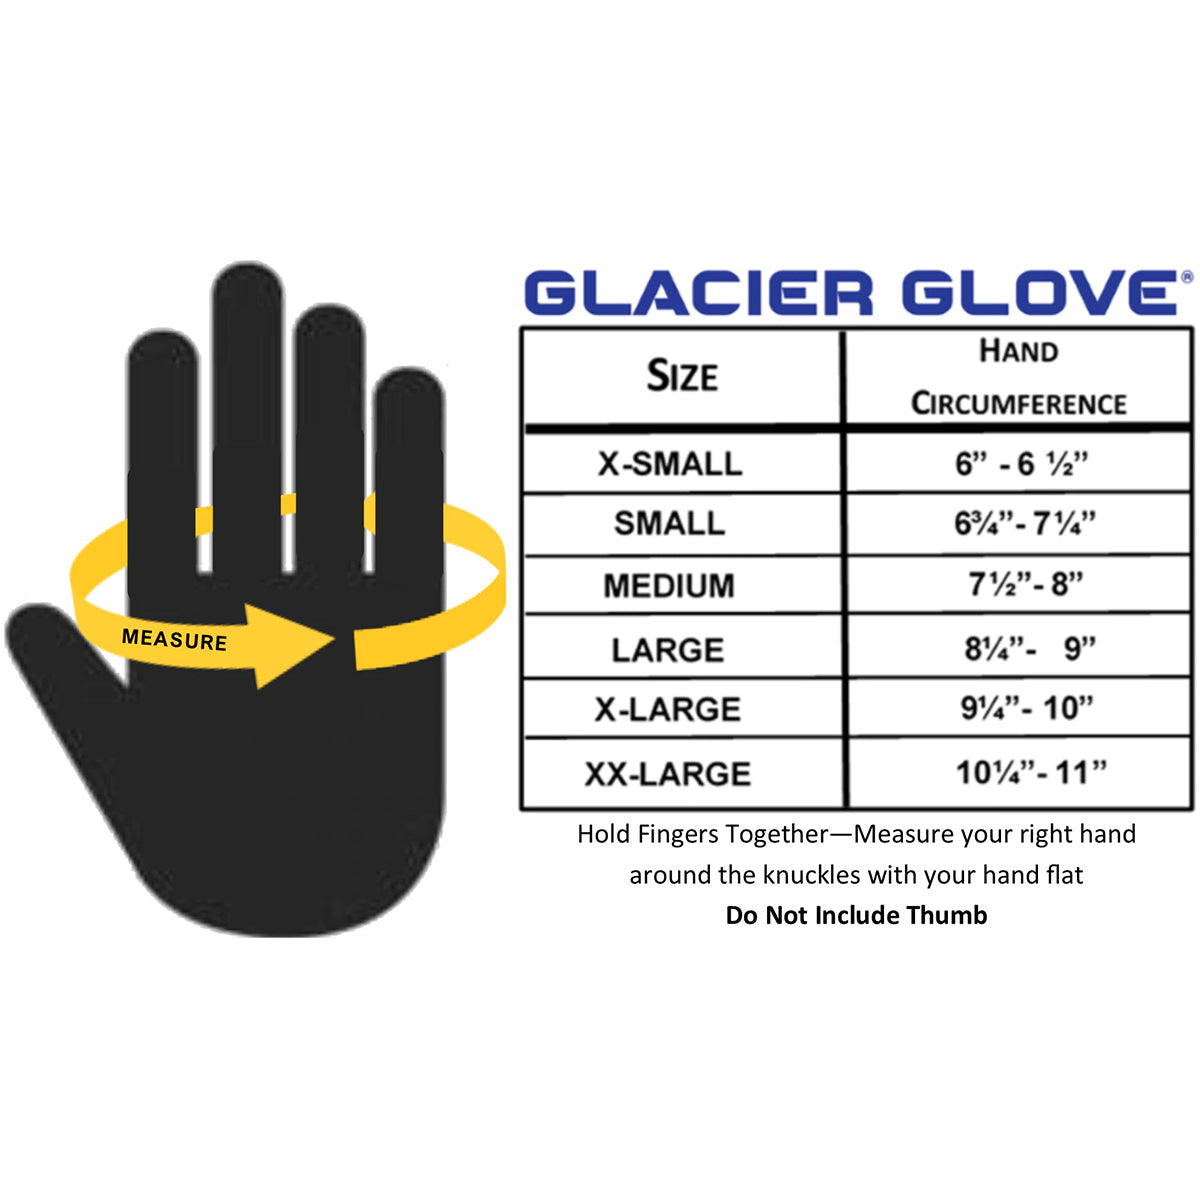 Glacier Glove Ascension Bay Fingerless Sun Gloves - Light Gray Glacier Glove